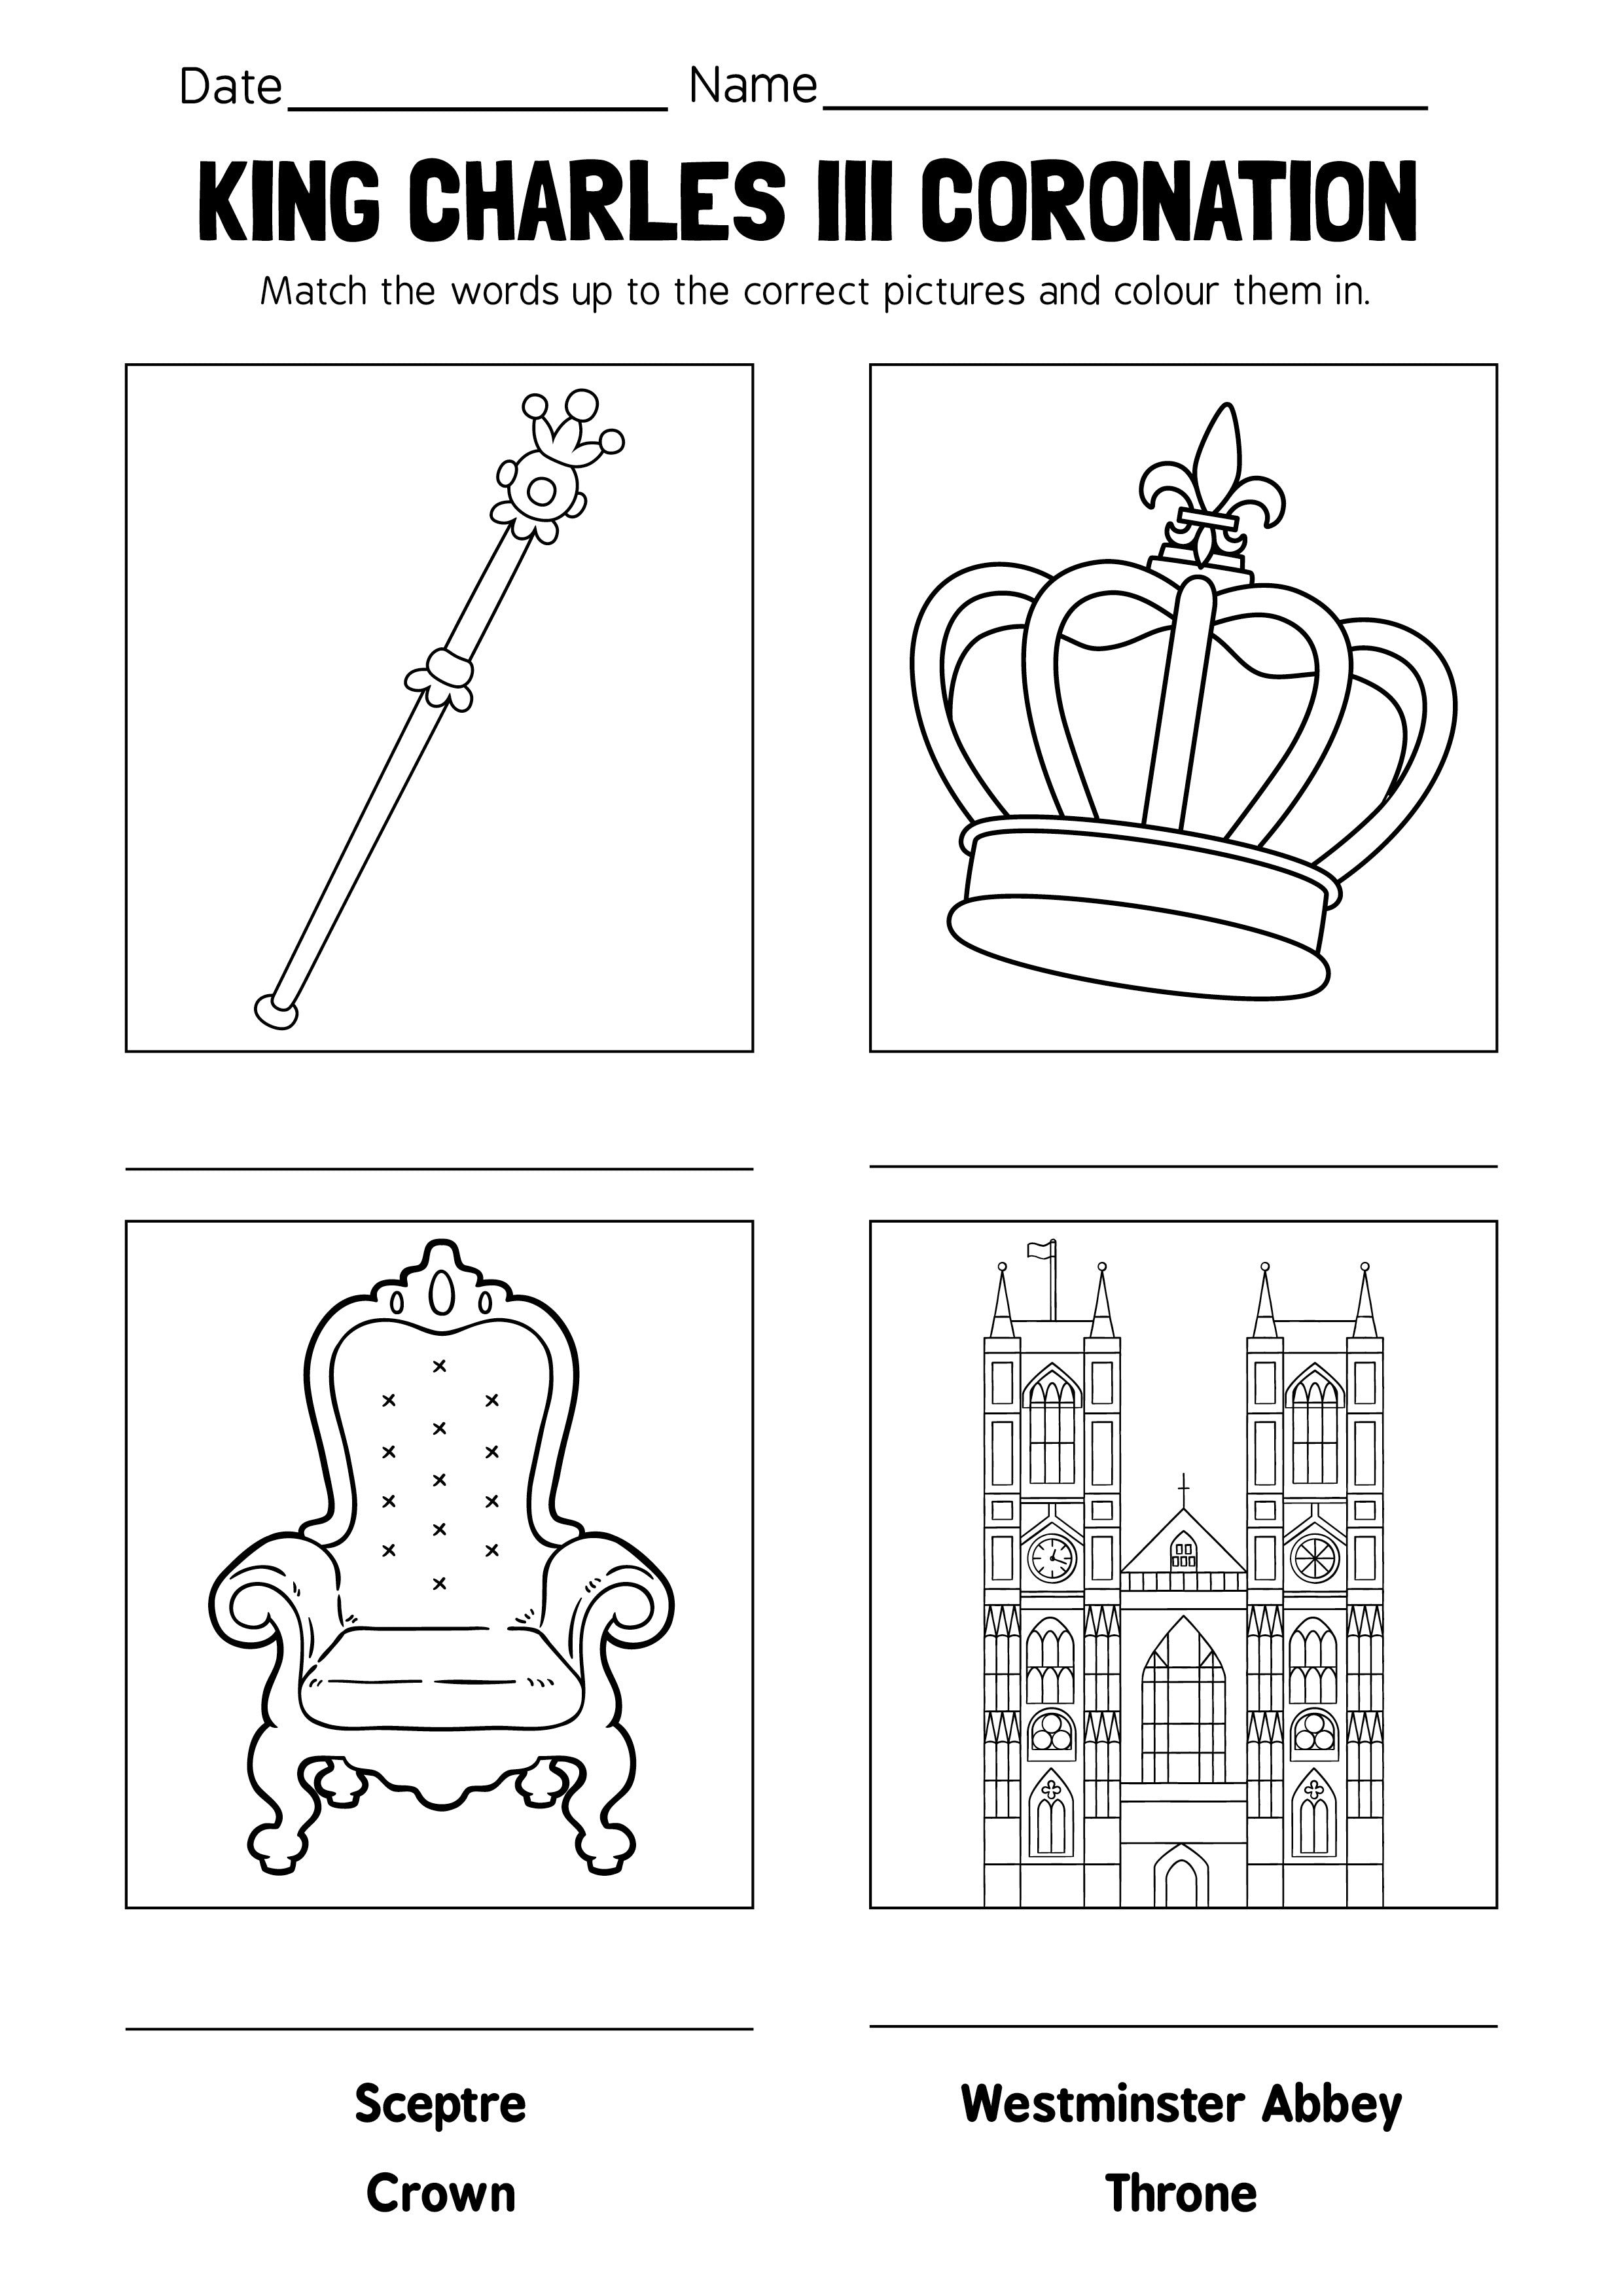 King Charles lll Coronation Work Sheet